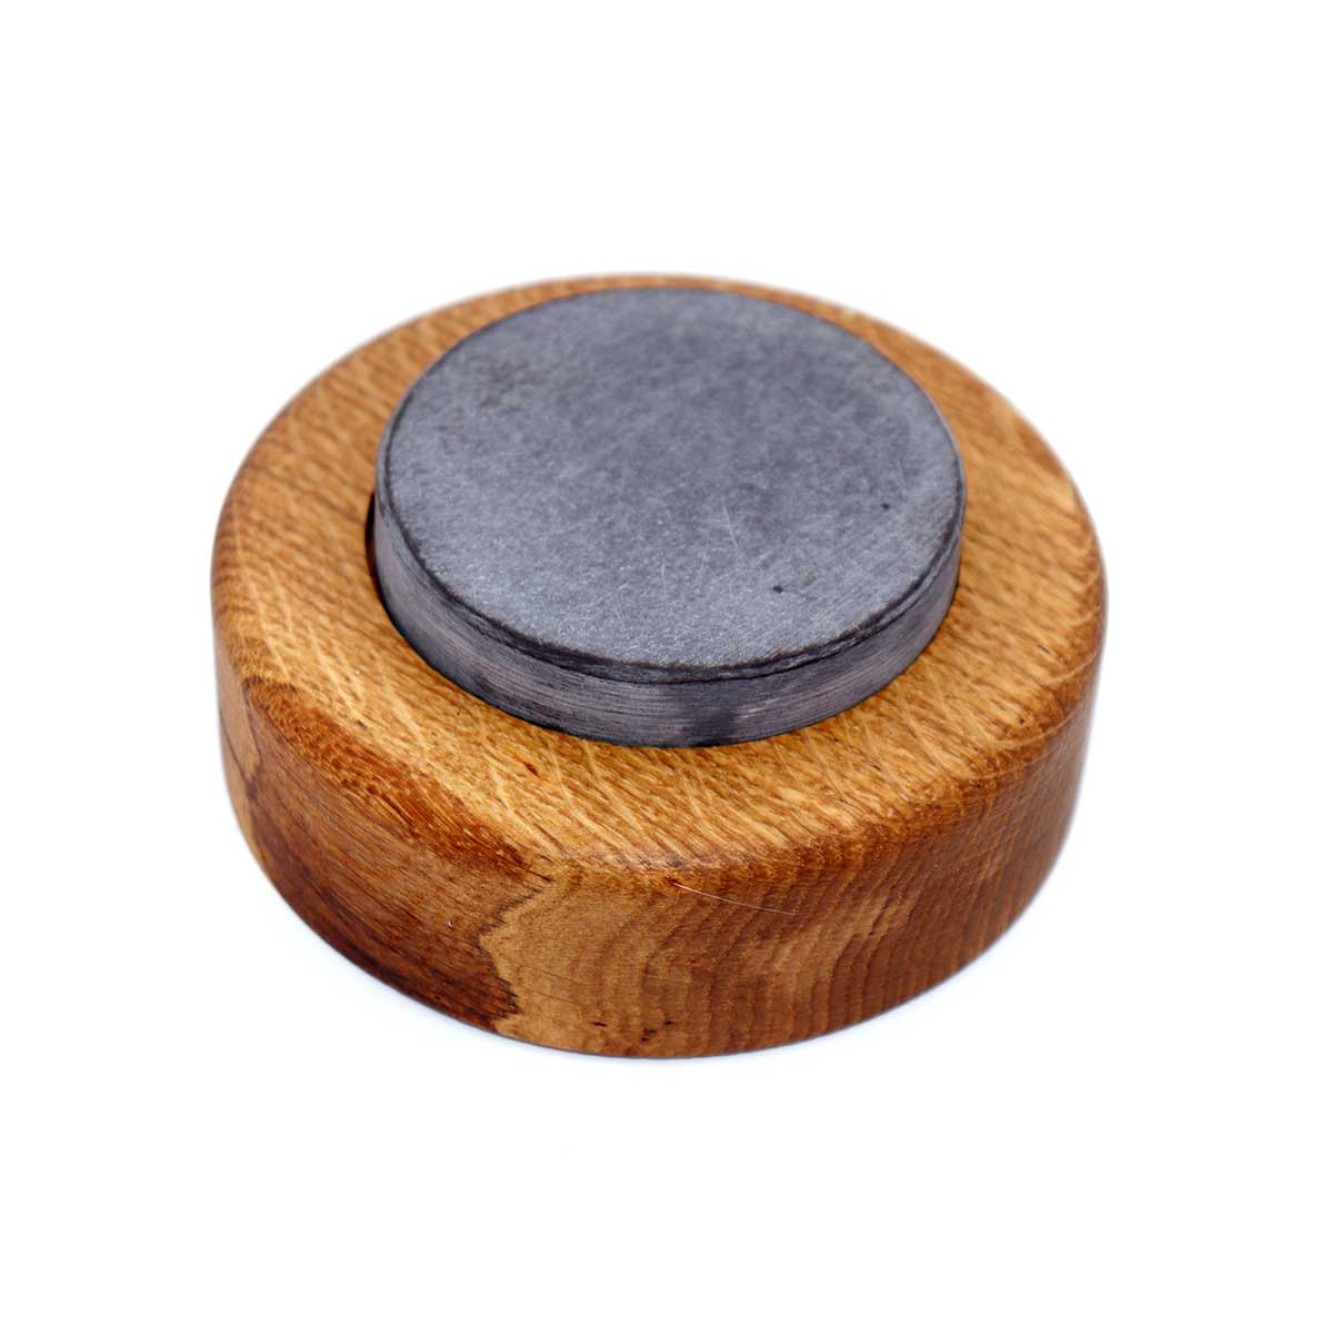 Blue Belgian Whetstone round grindstone diameter 2.95 inch in a wooden base